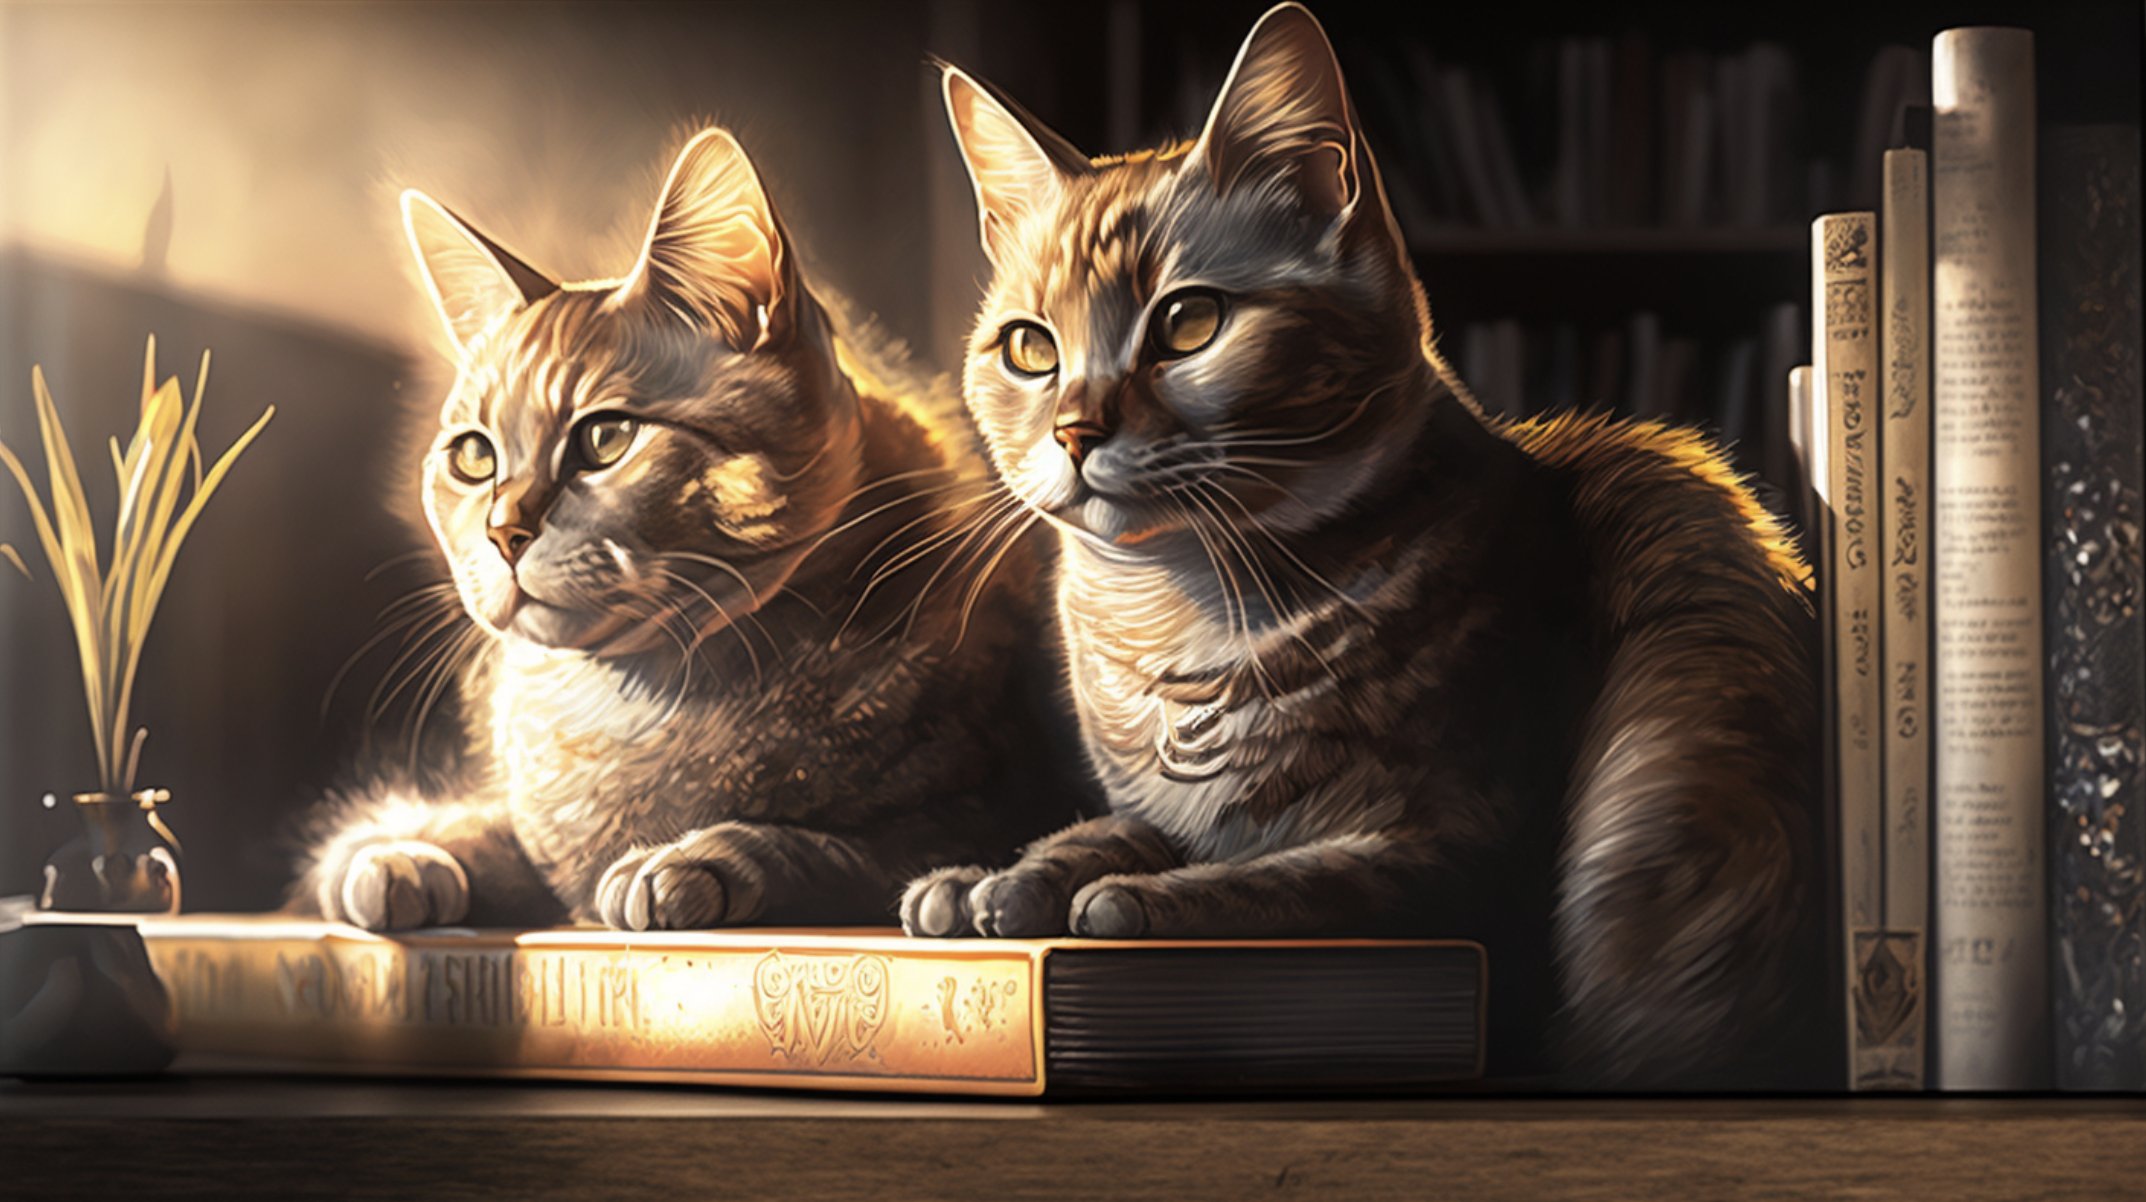 DIY Cat Bookshelf: Build Your Feline Friend's Dream Hangout